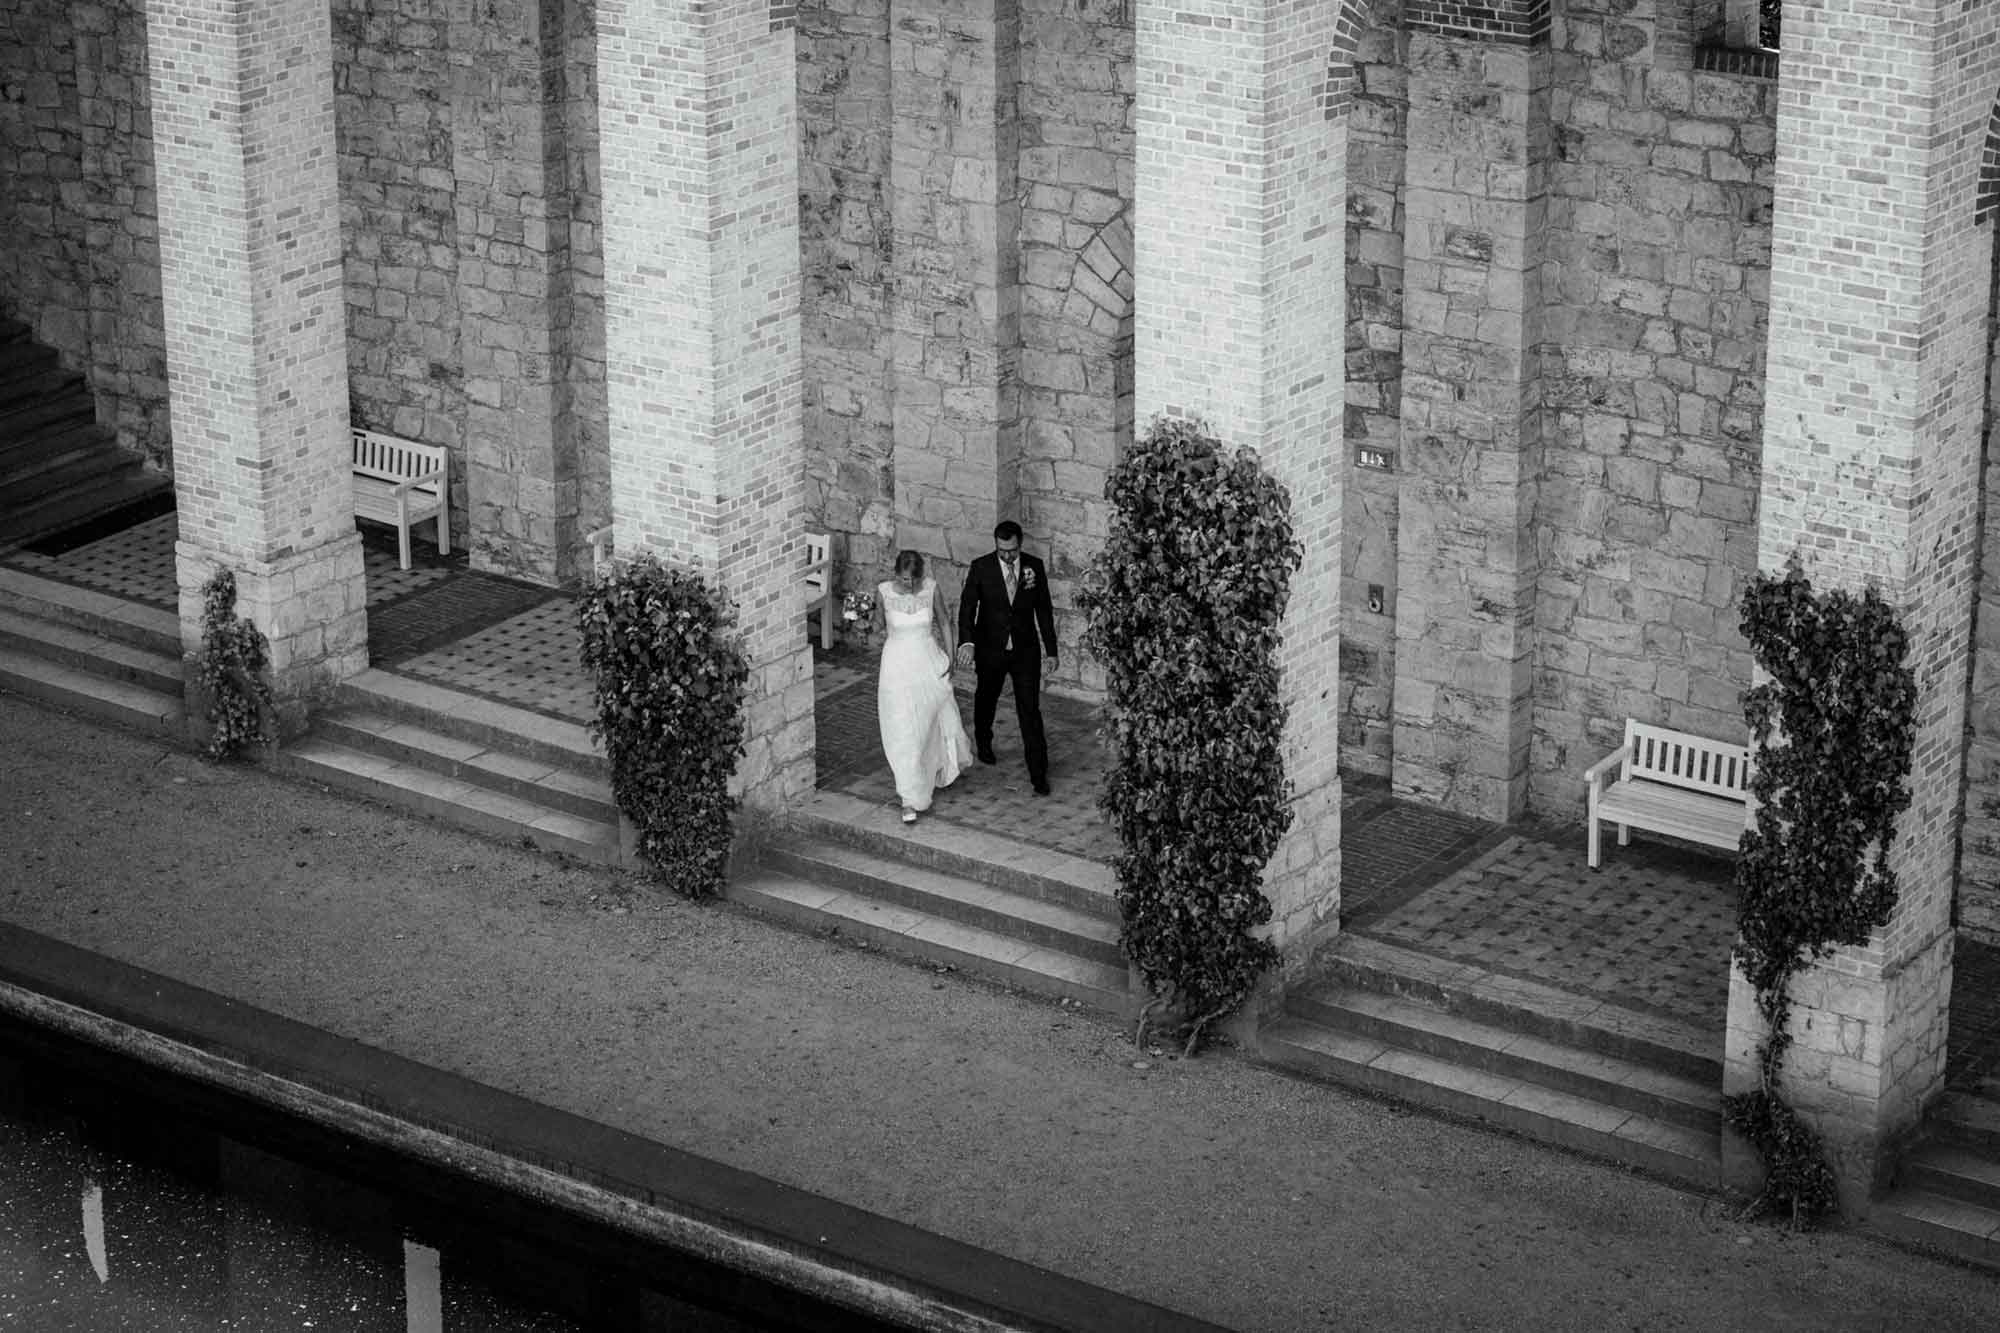 Brautpaar geht Hand in Hand einen Säulengang entlang. Schwarz-weiß Aufnahme